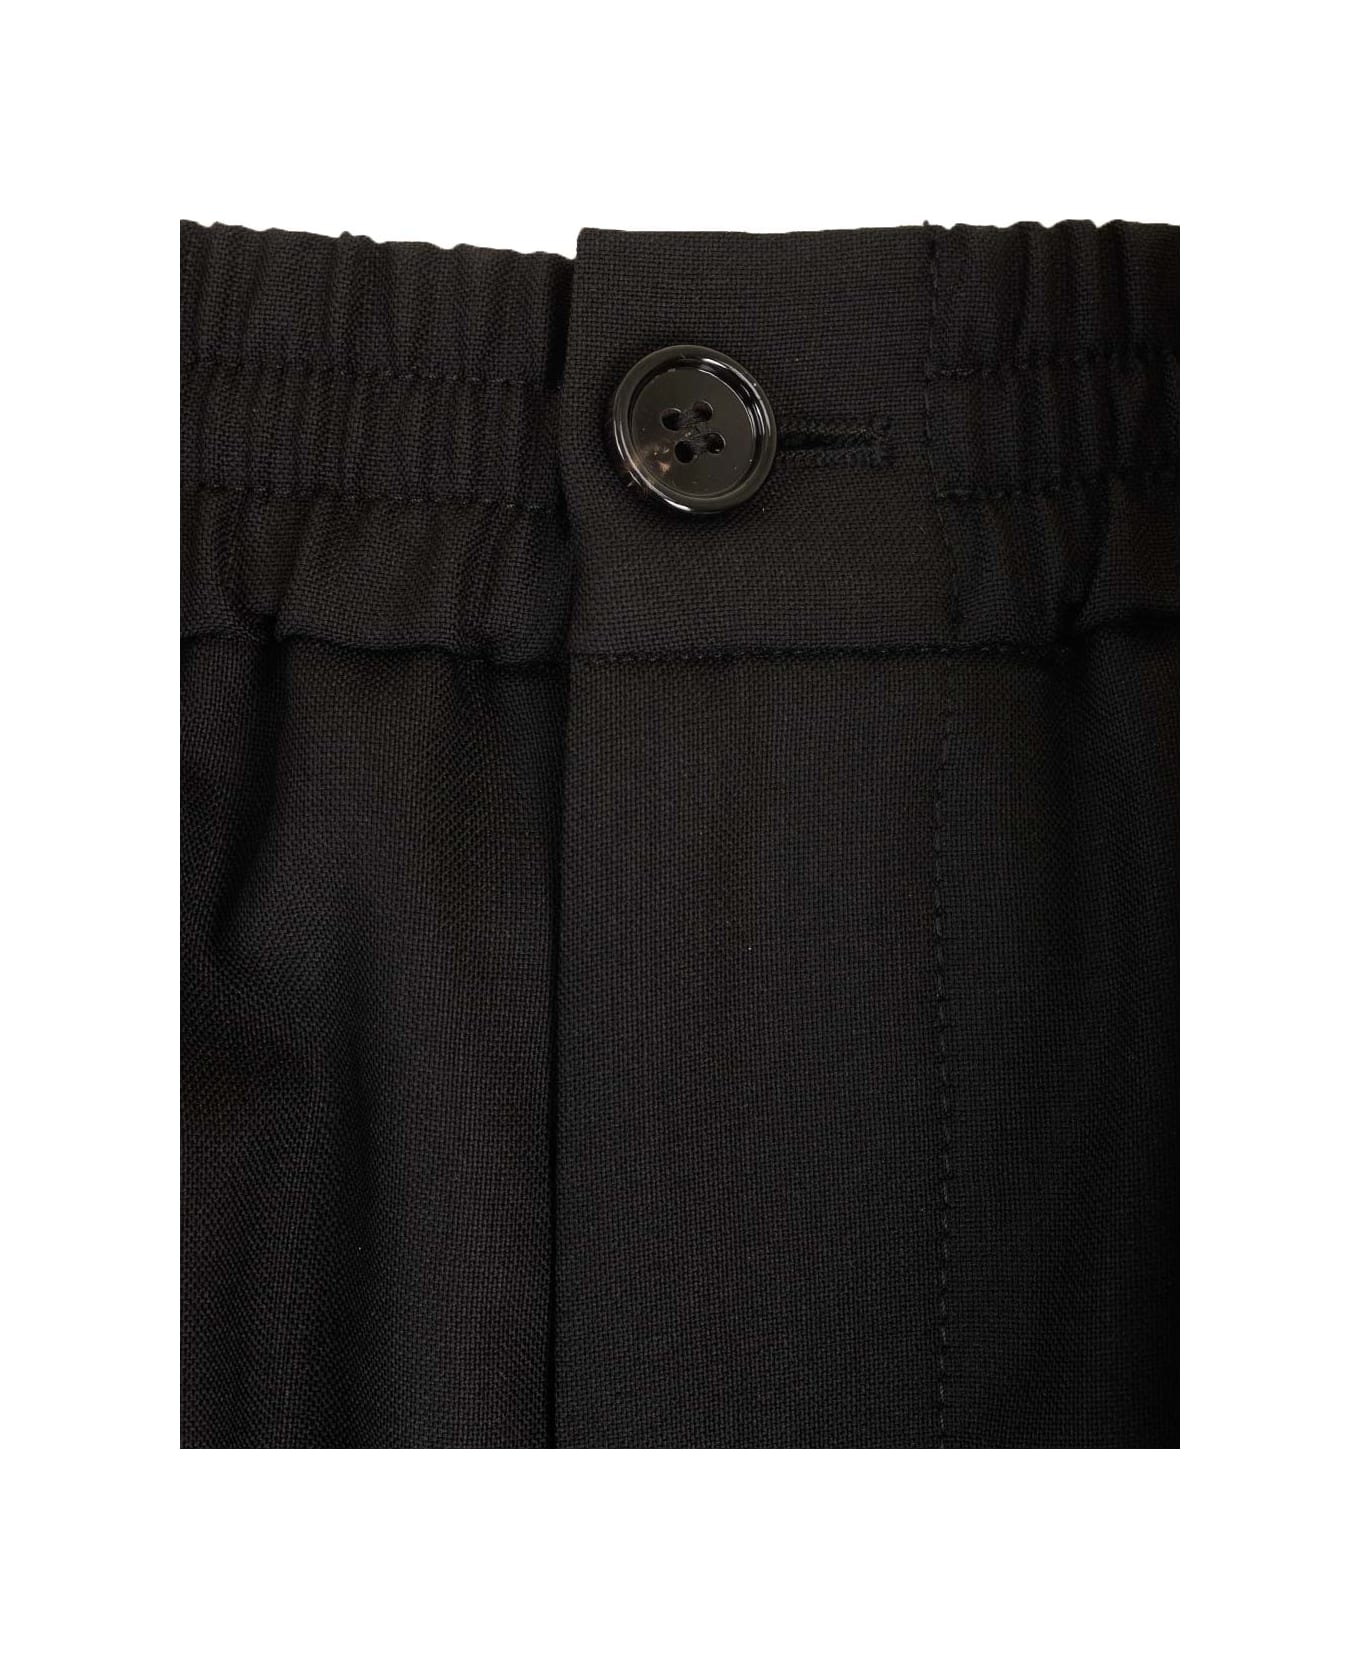 Ami Alexandre Mattiussi Black Wool Bermuda Shorts - BLACK